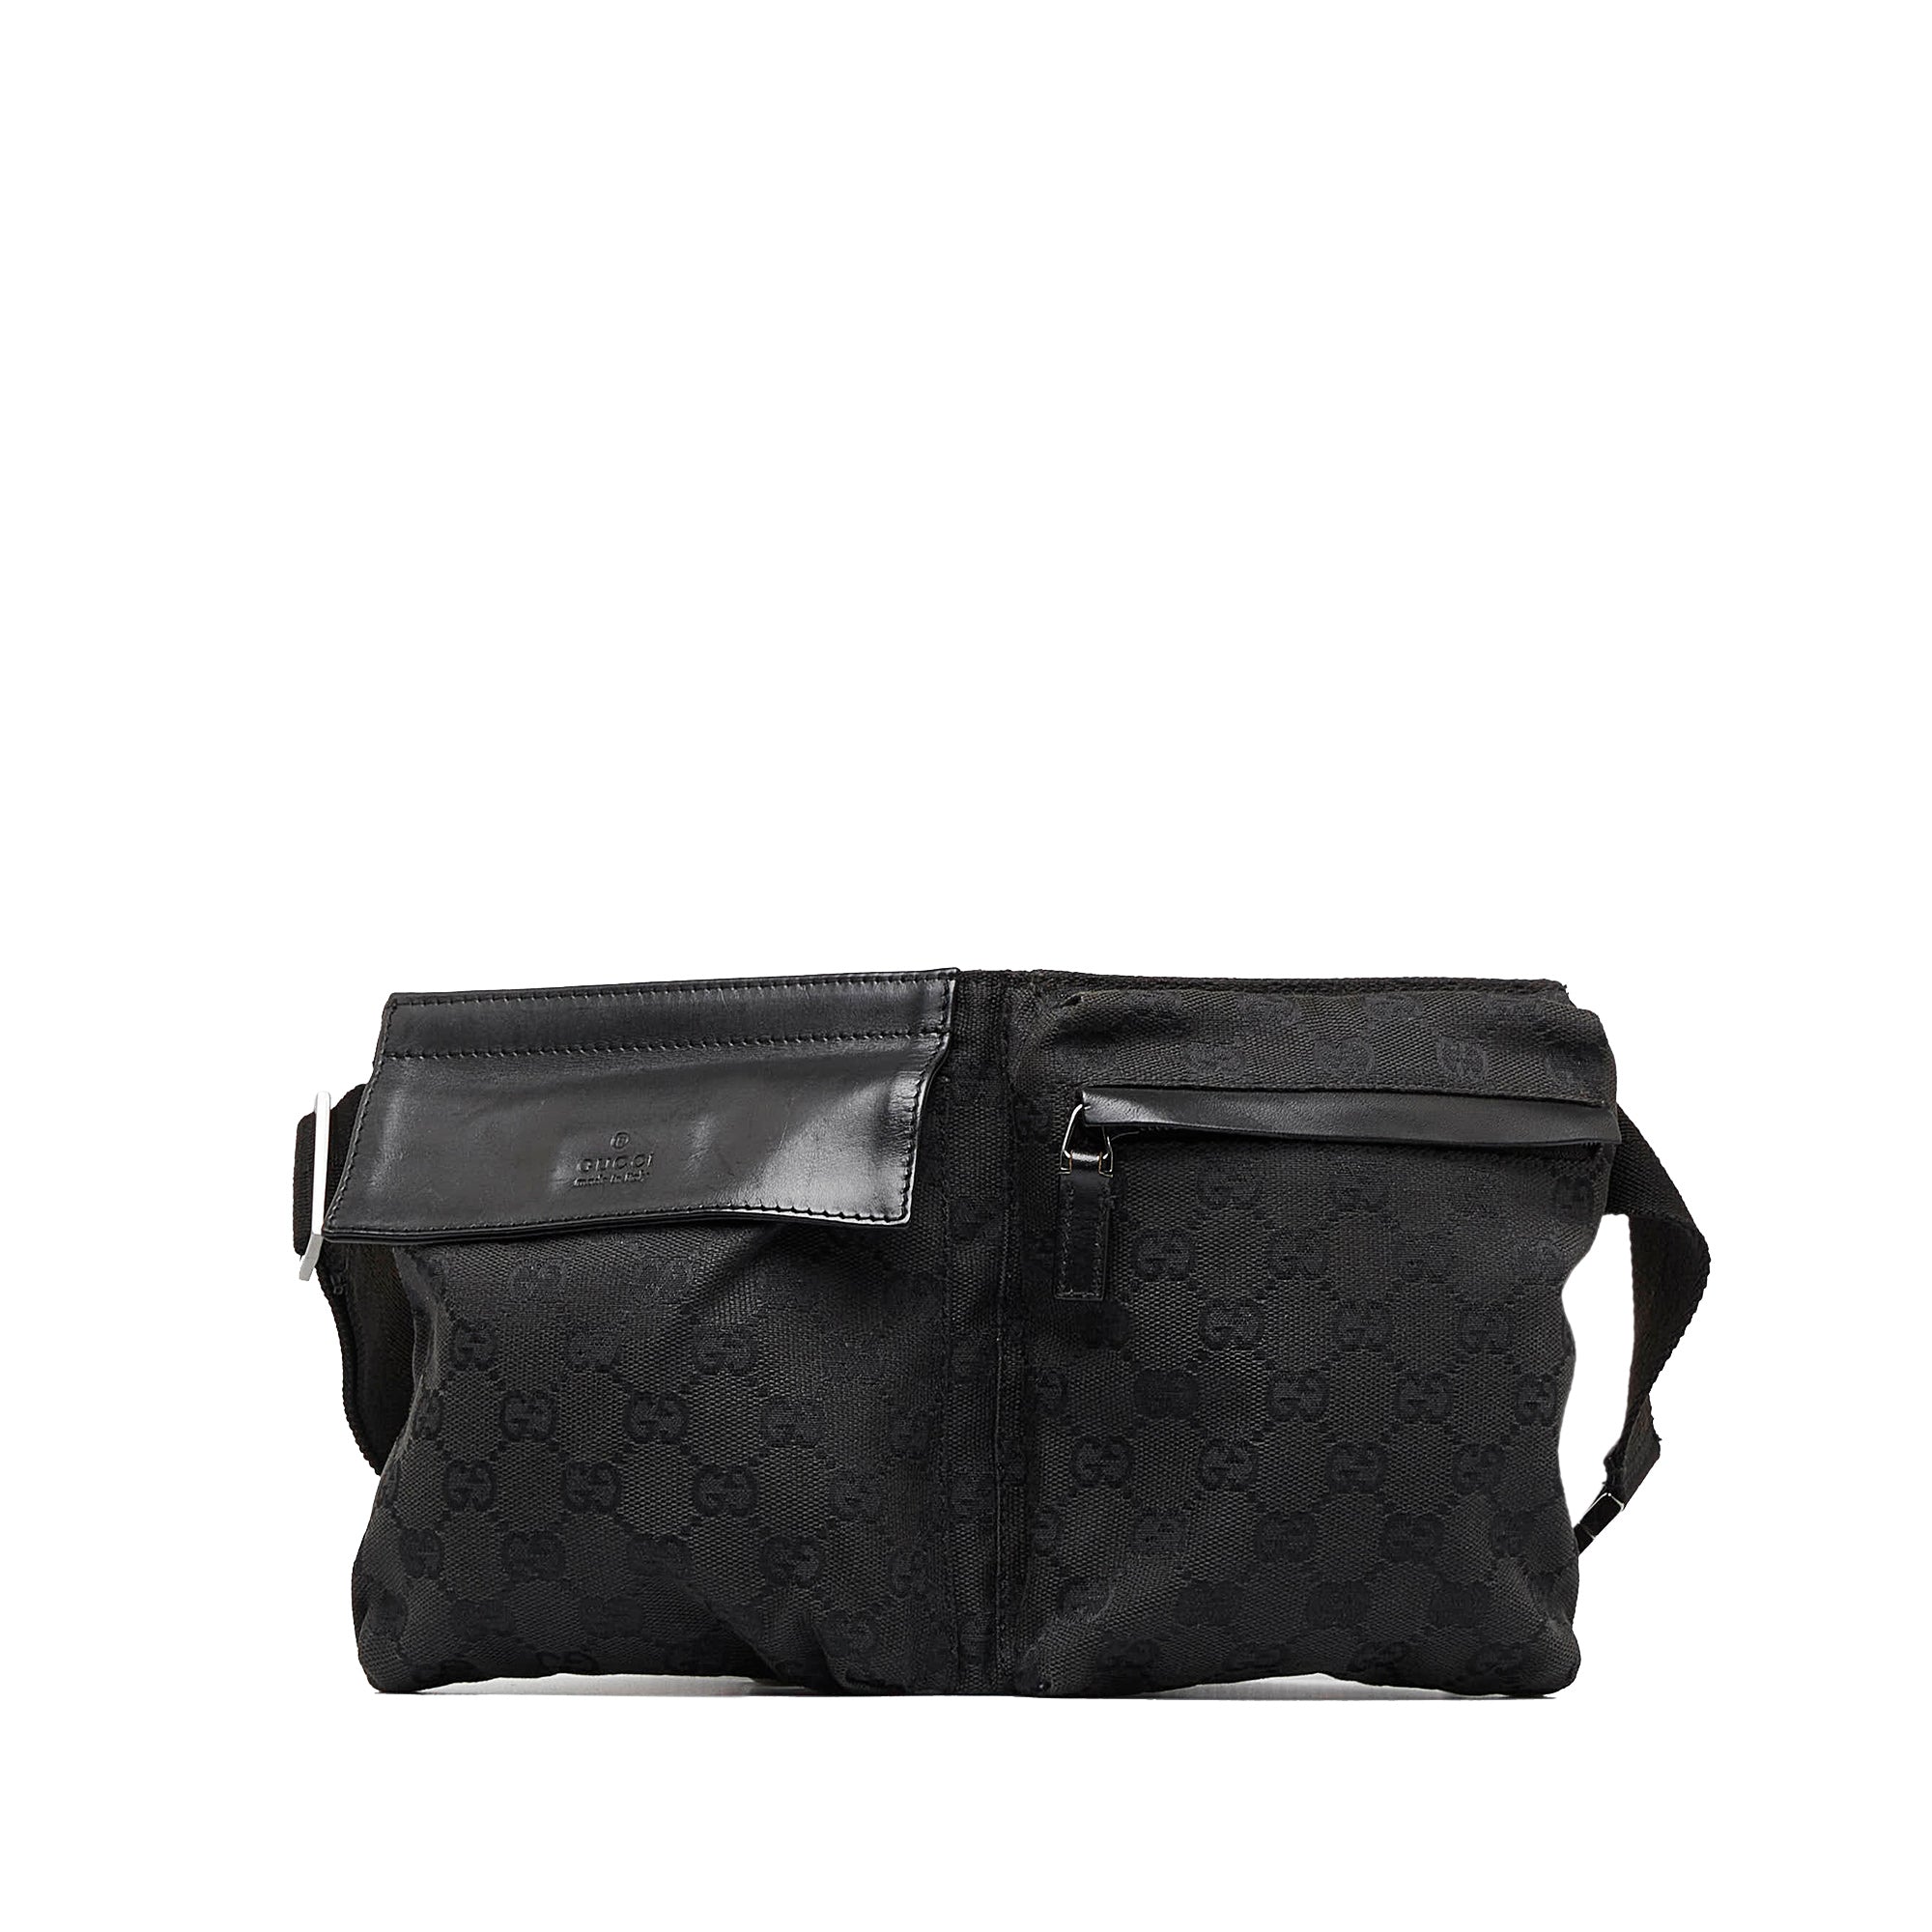 Gucci GG Waist Bag Black